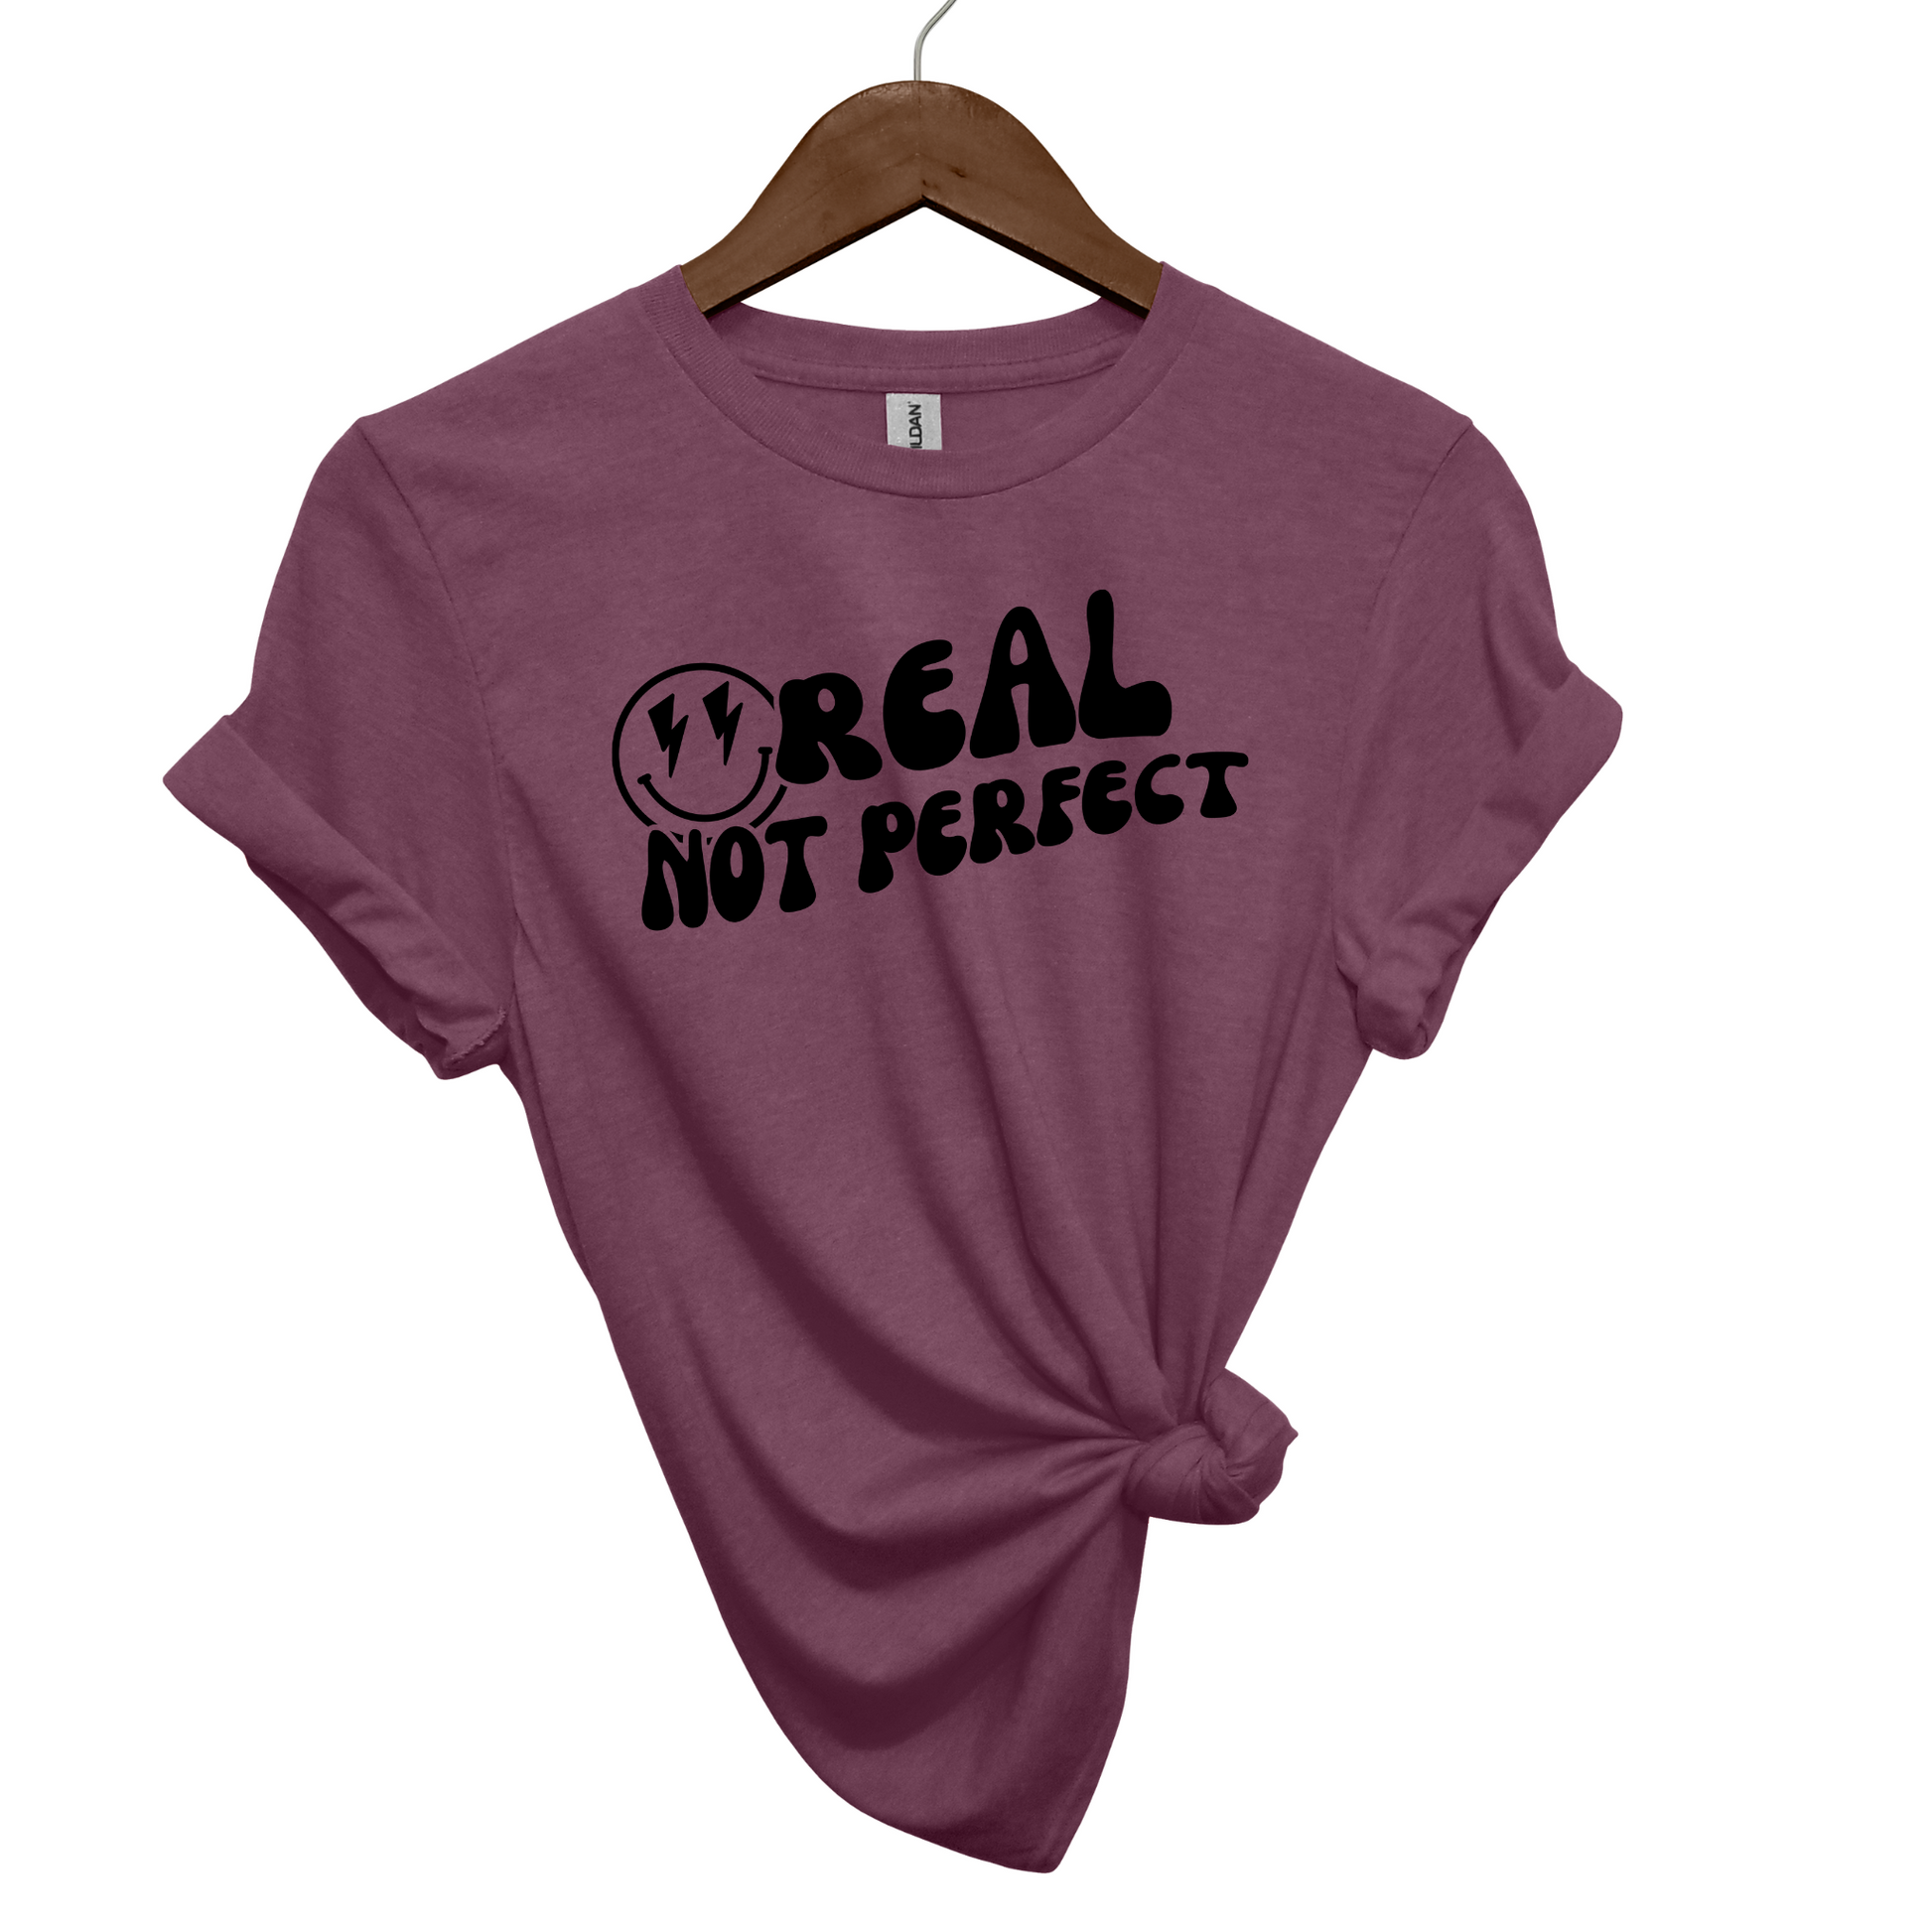 Real, Not Perfect Crewneck T Shirt heather maroon